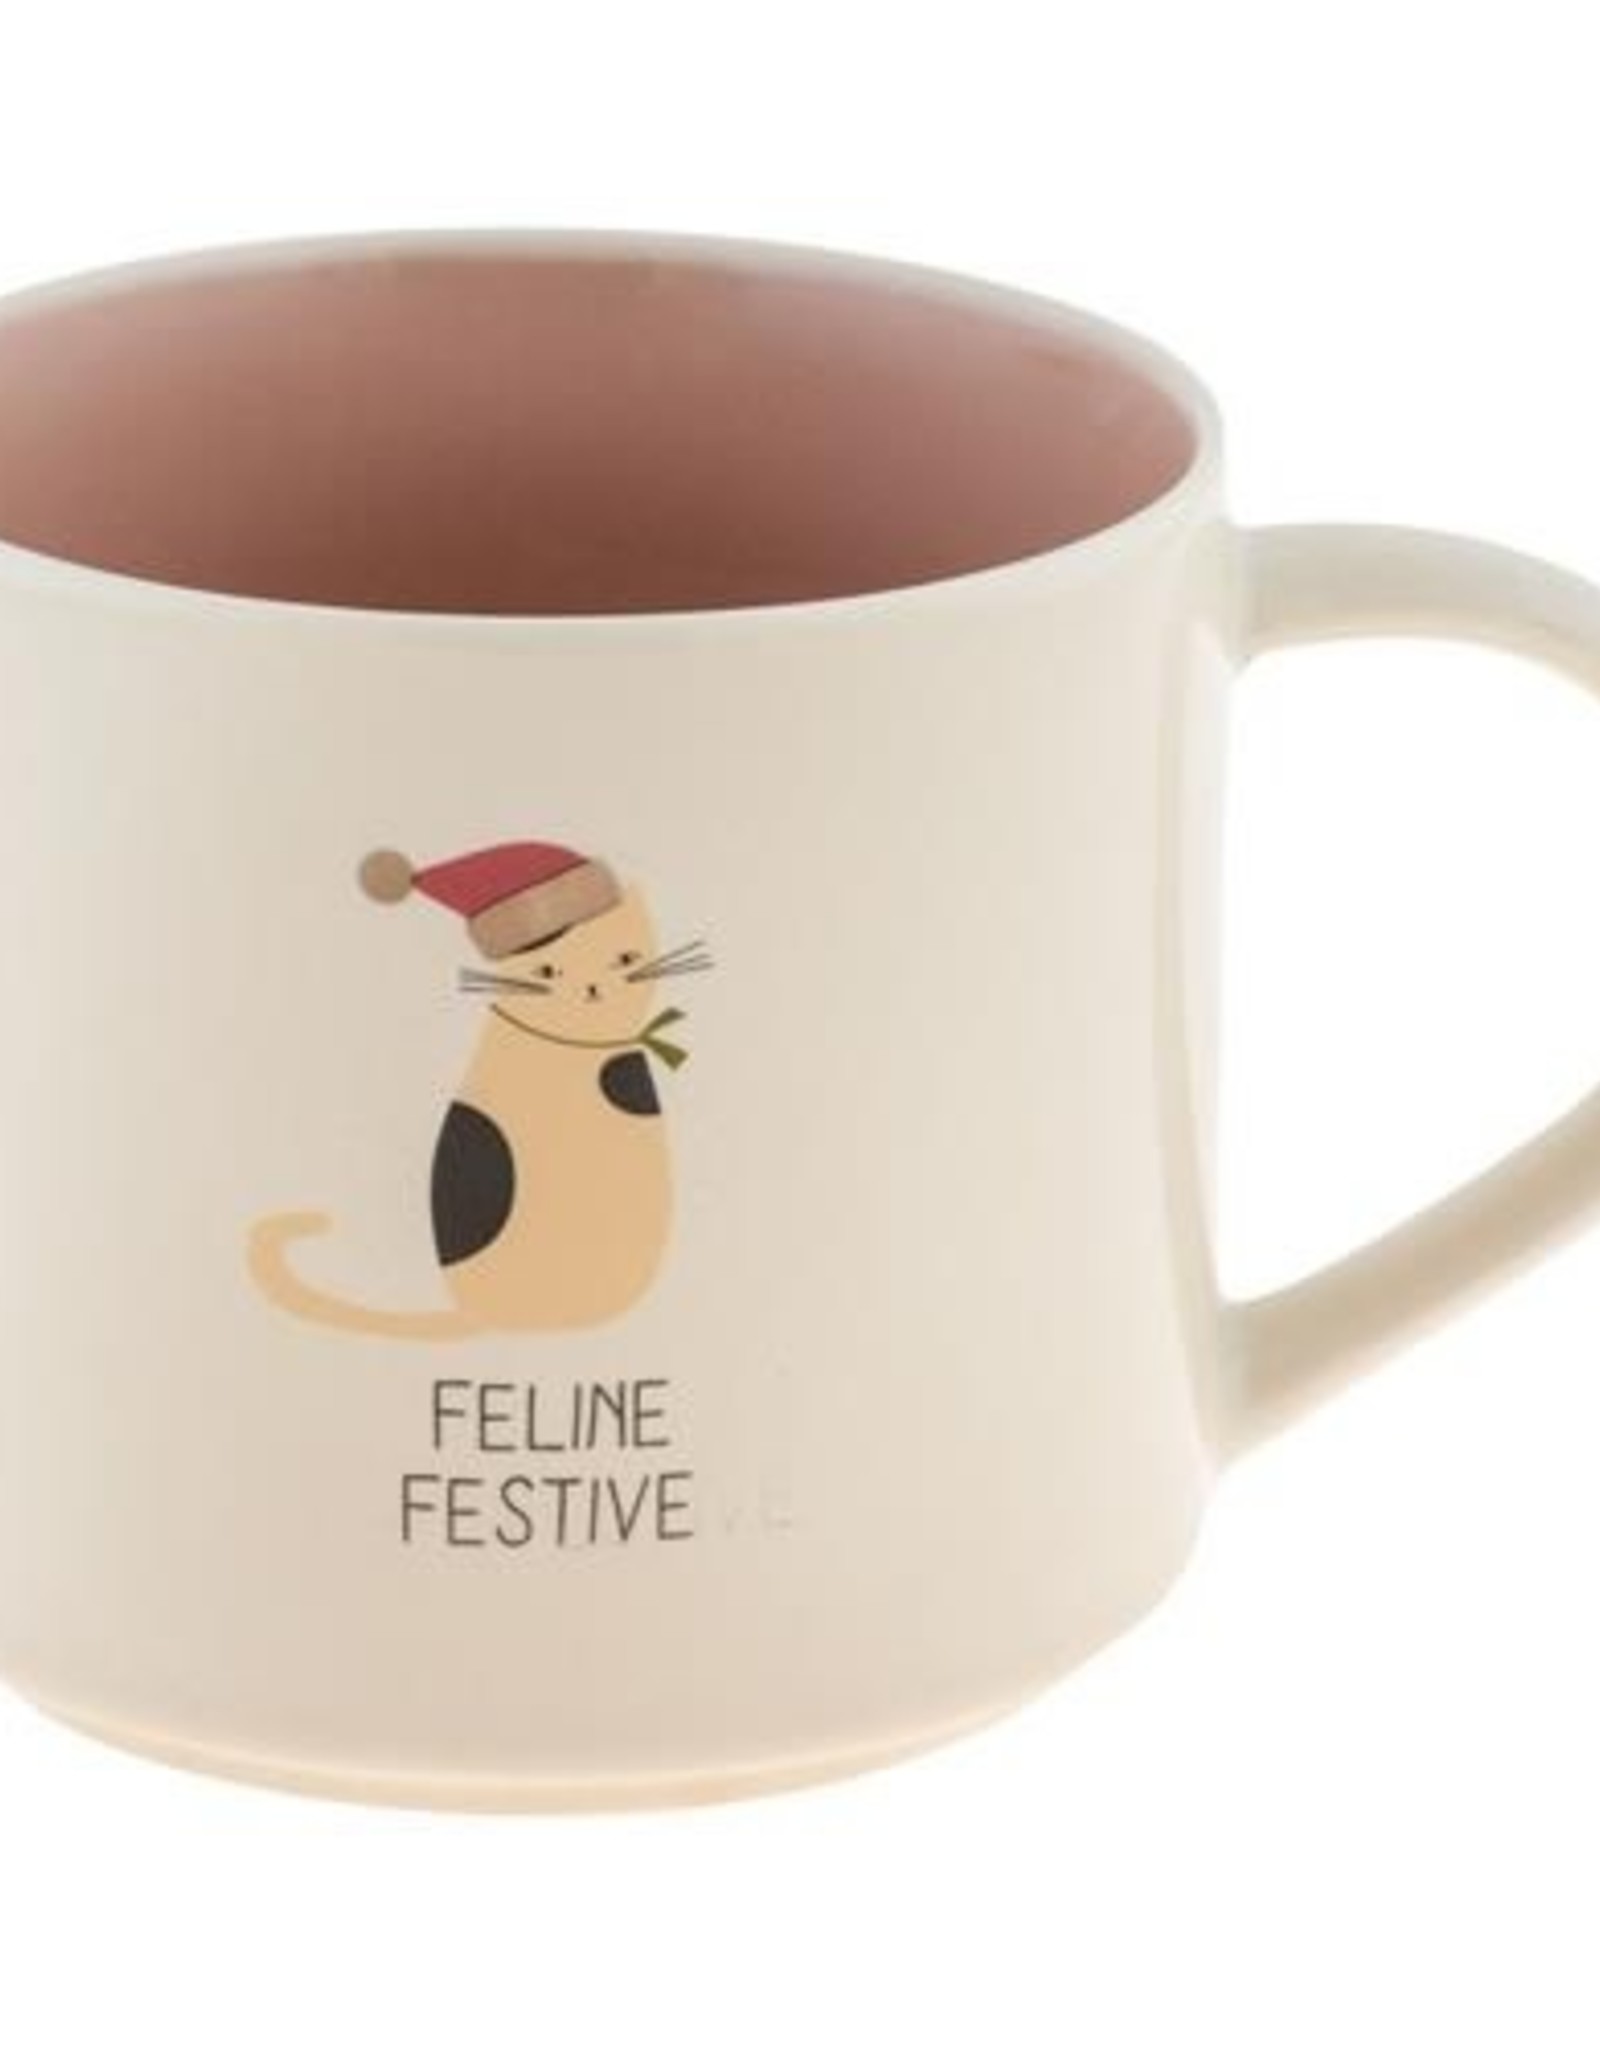 Feline Festive Mug